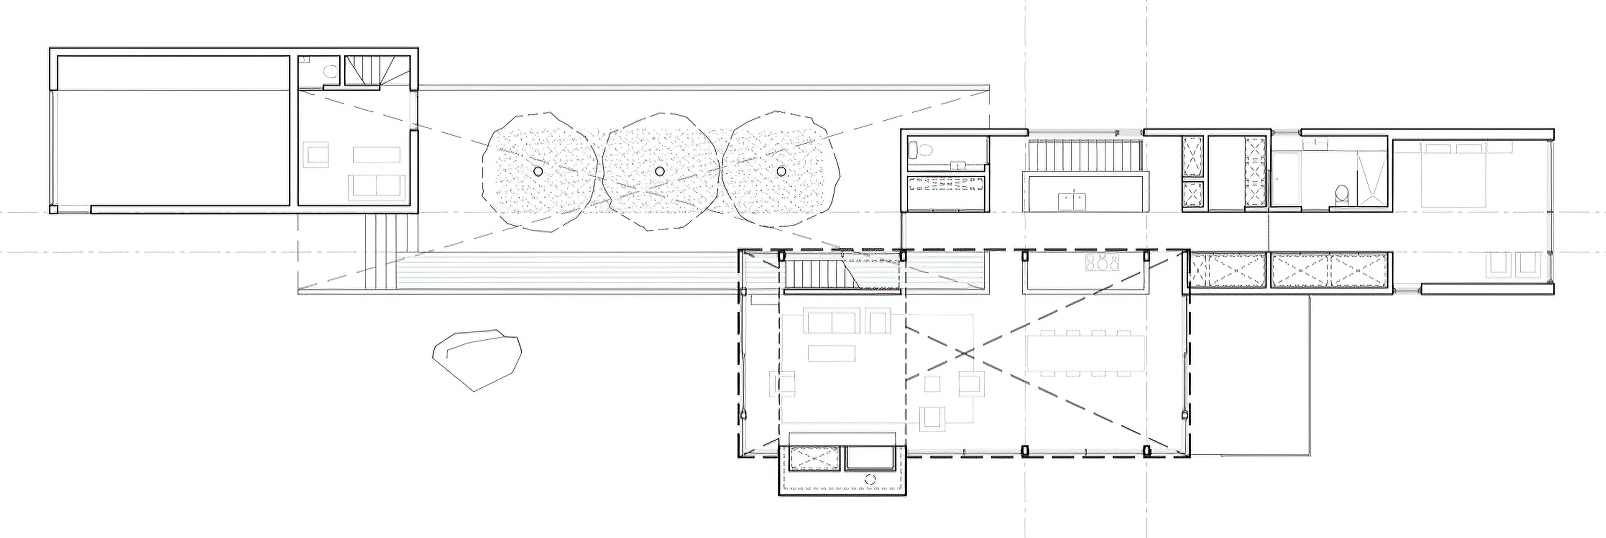 Martin-Lancaster House - Noonan Drive, Prospect, NS, Canada - Floor Plans